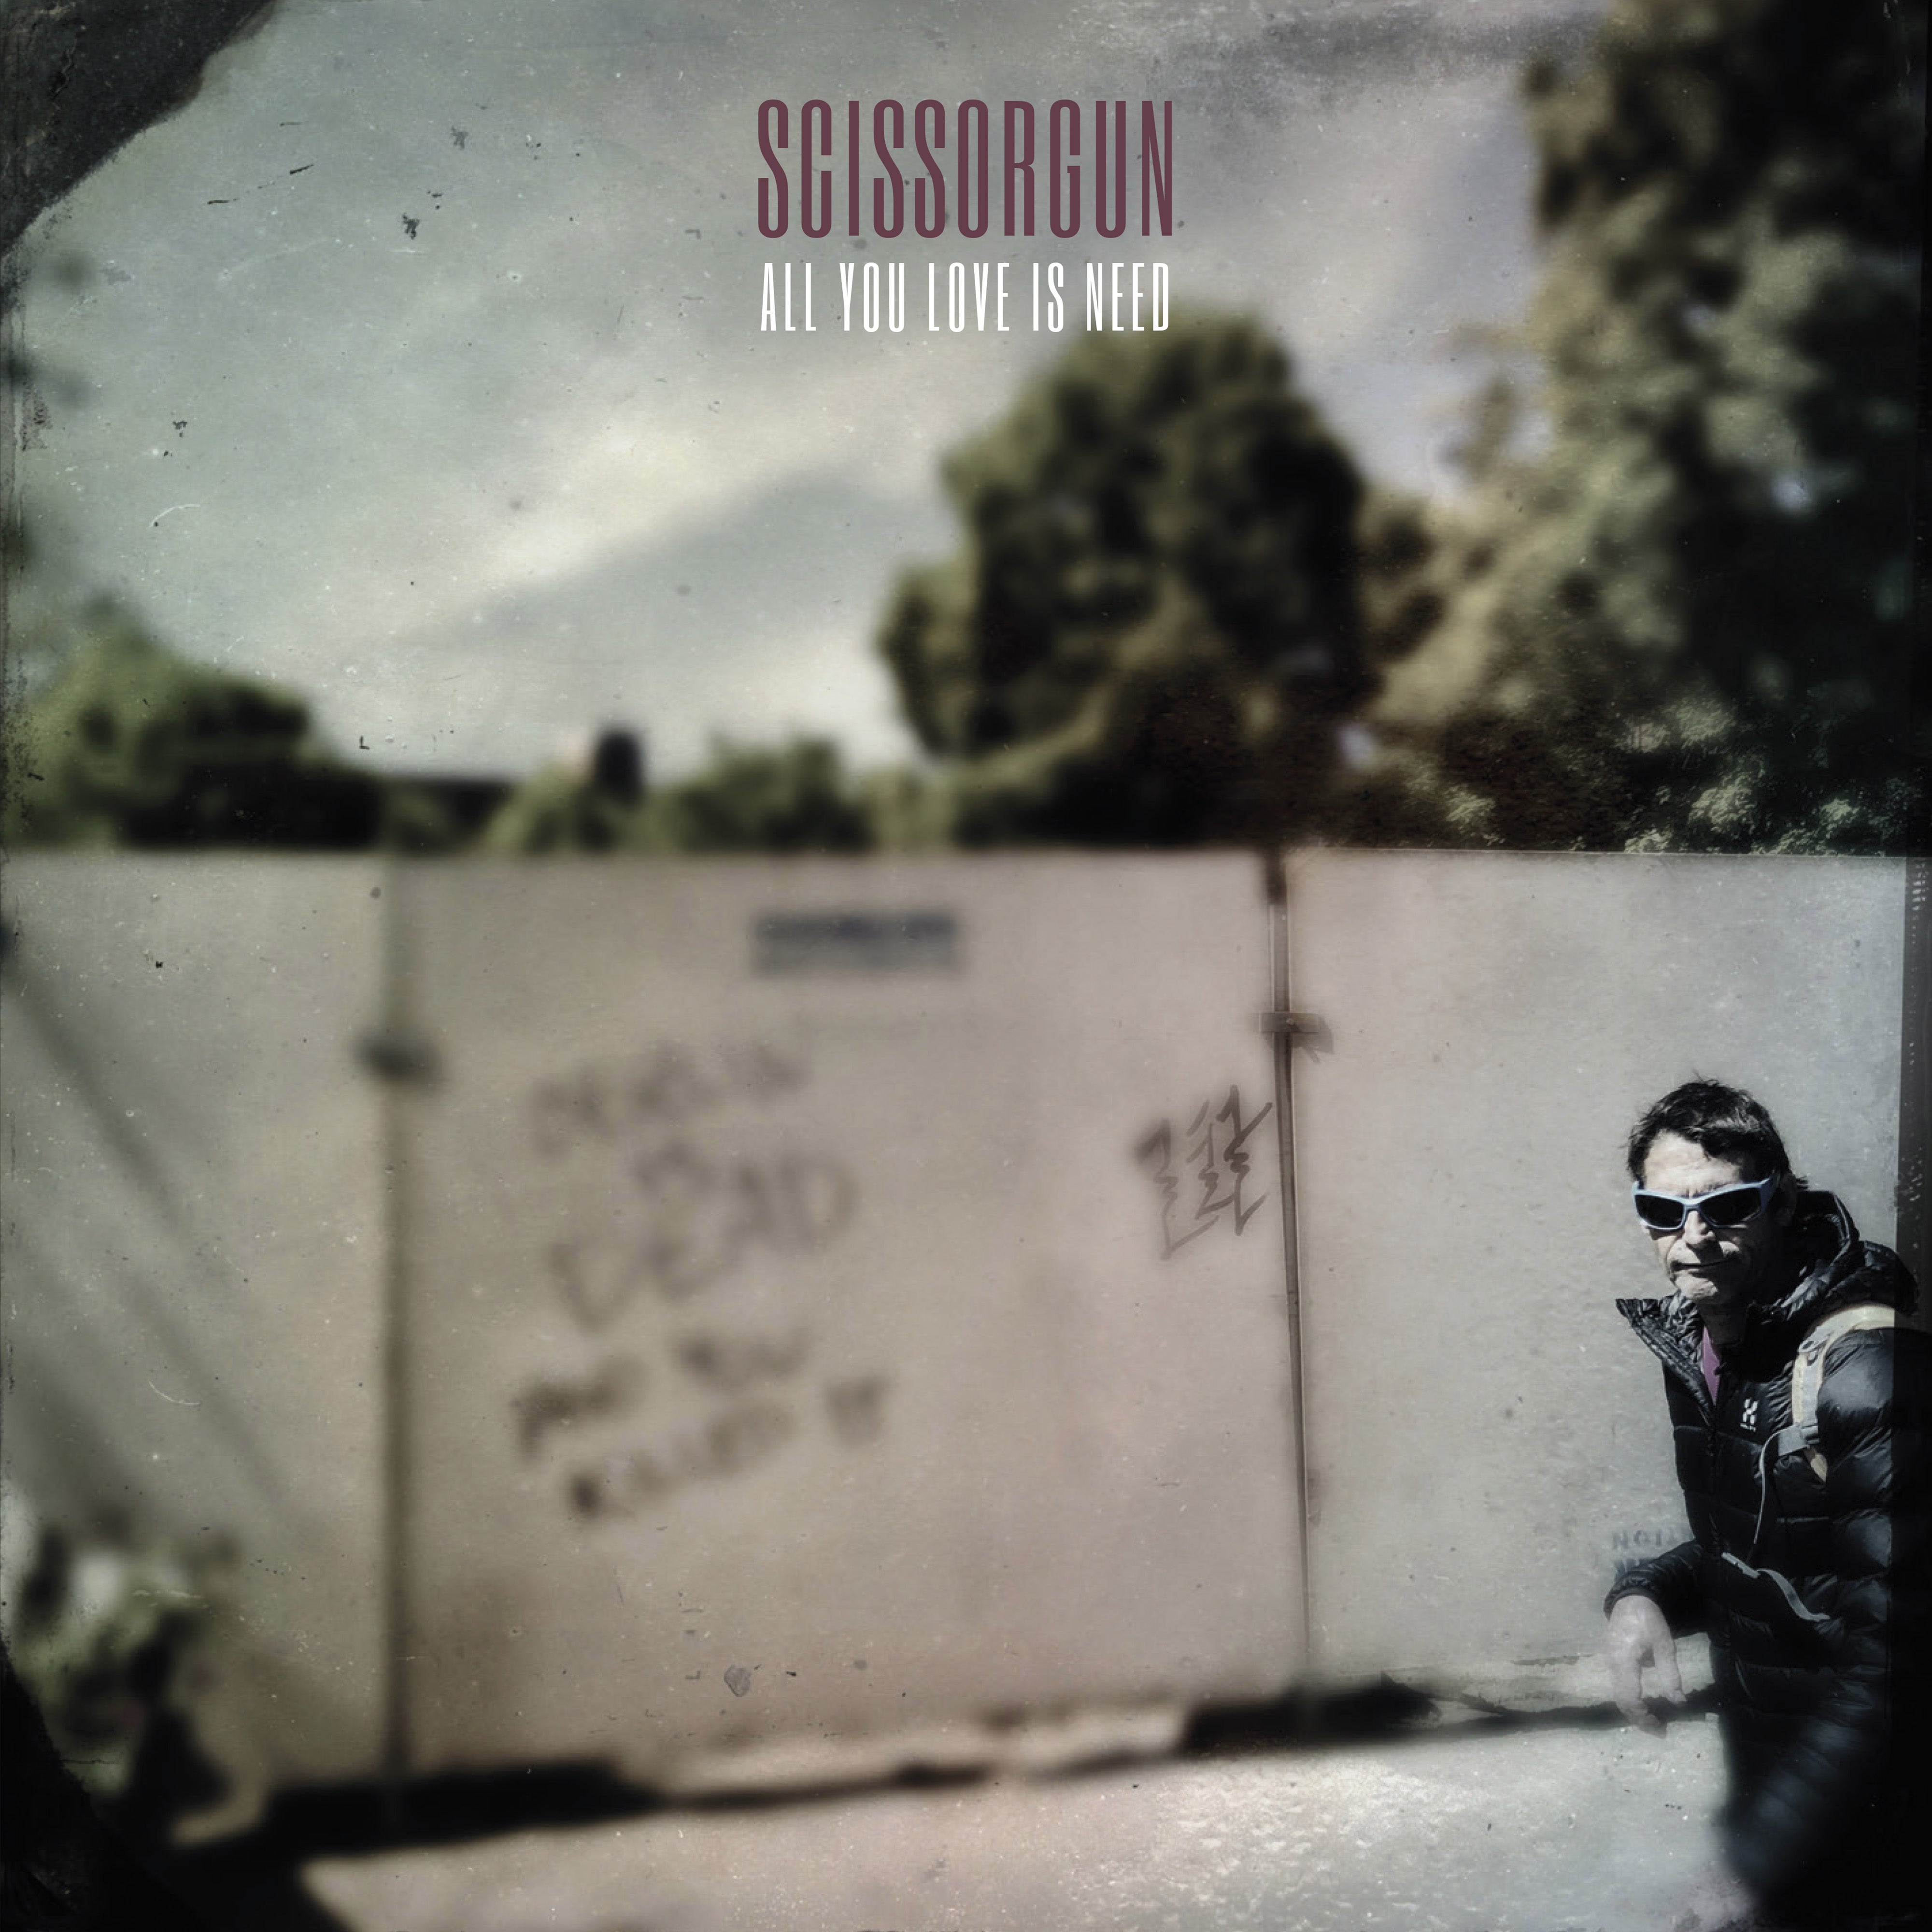 Scissorgun - All You Love is Need